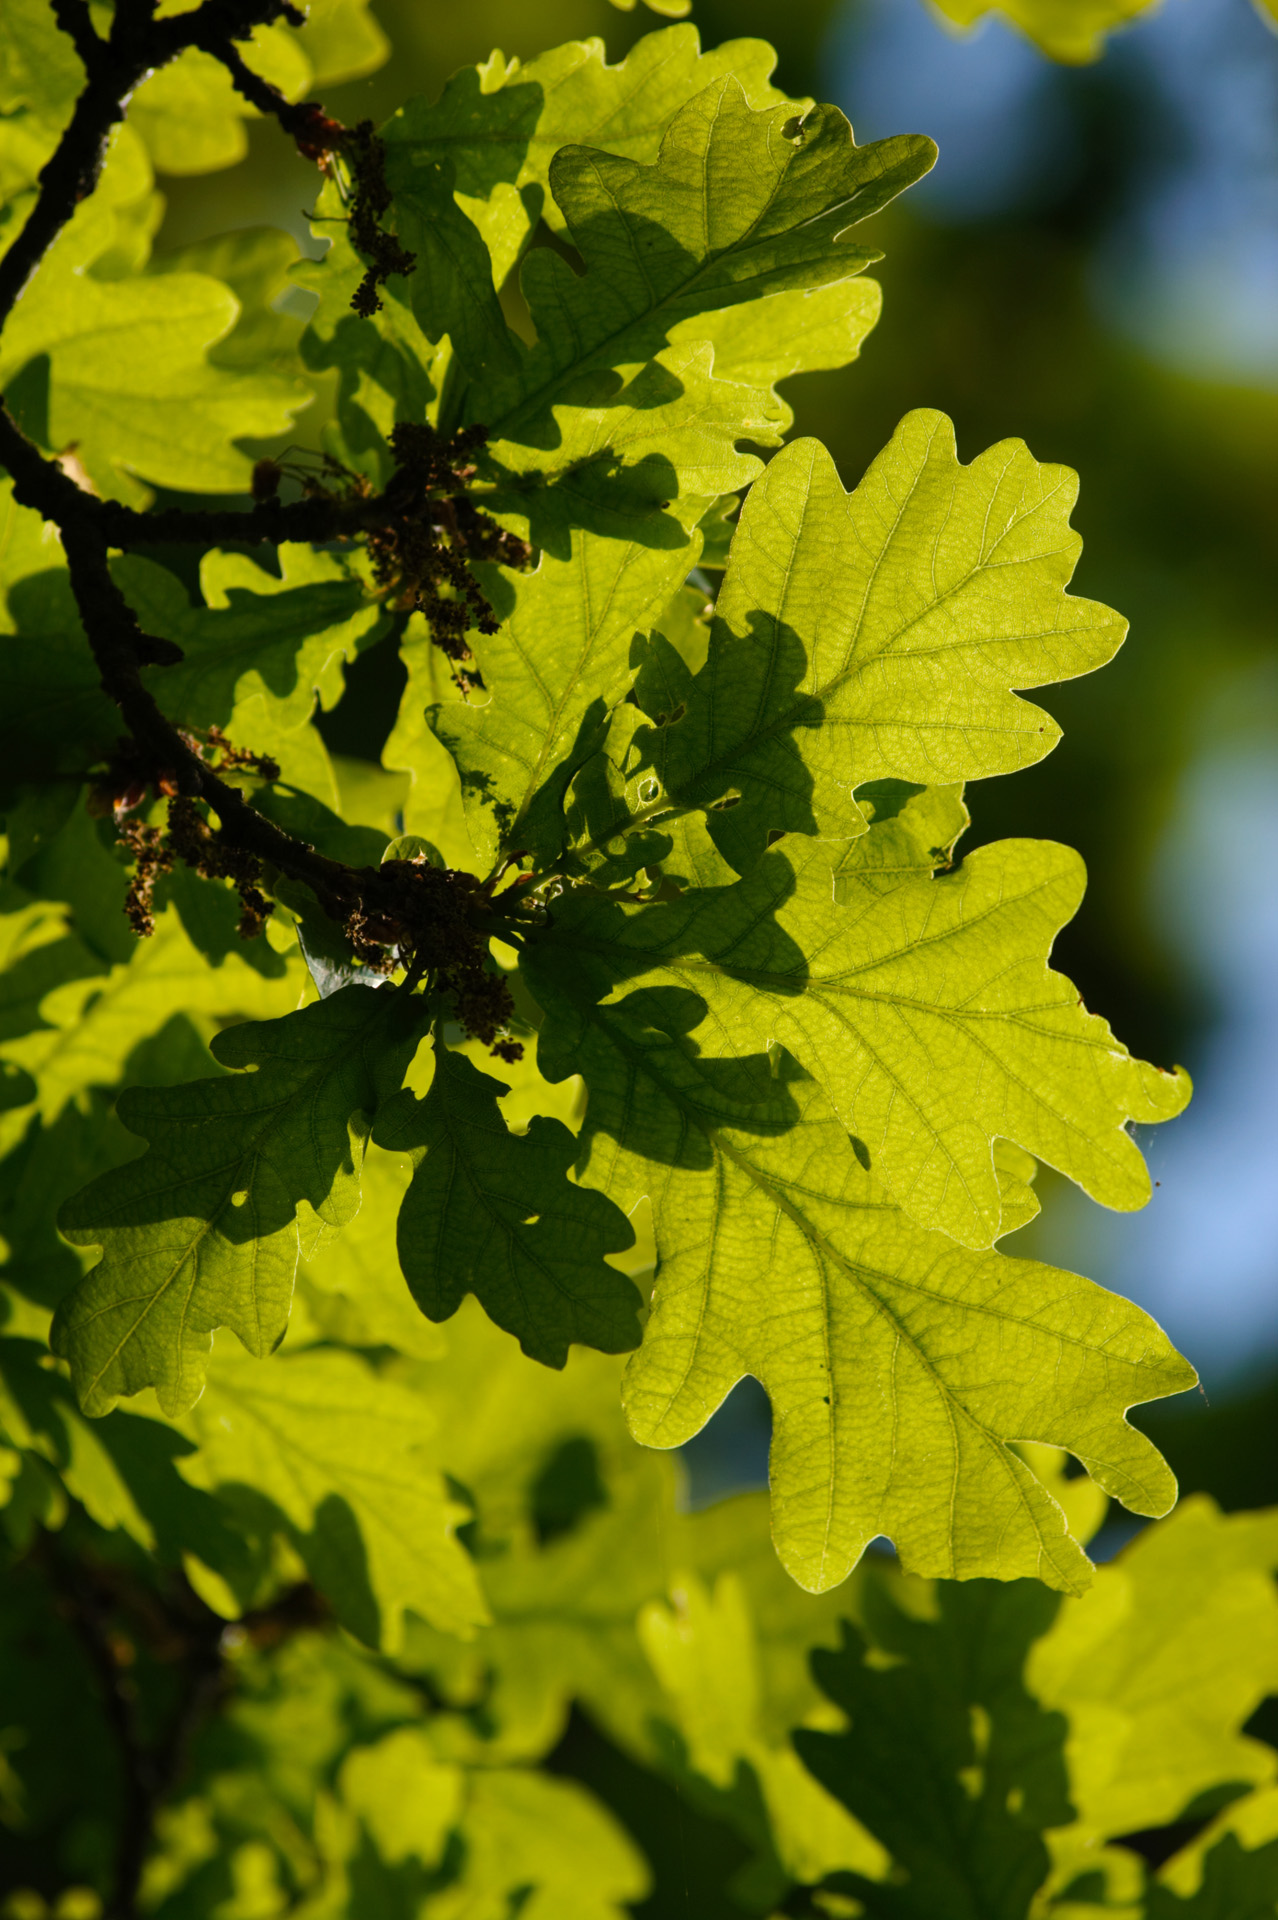 Pristine new oak leaves in the spring sunshine